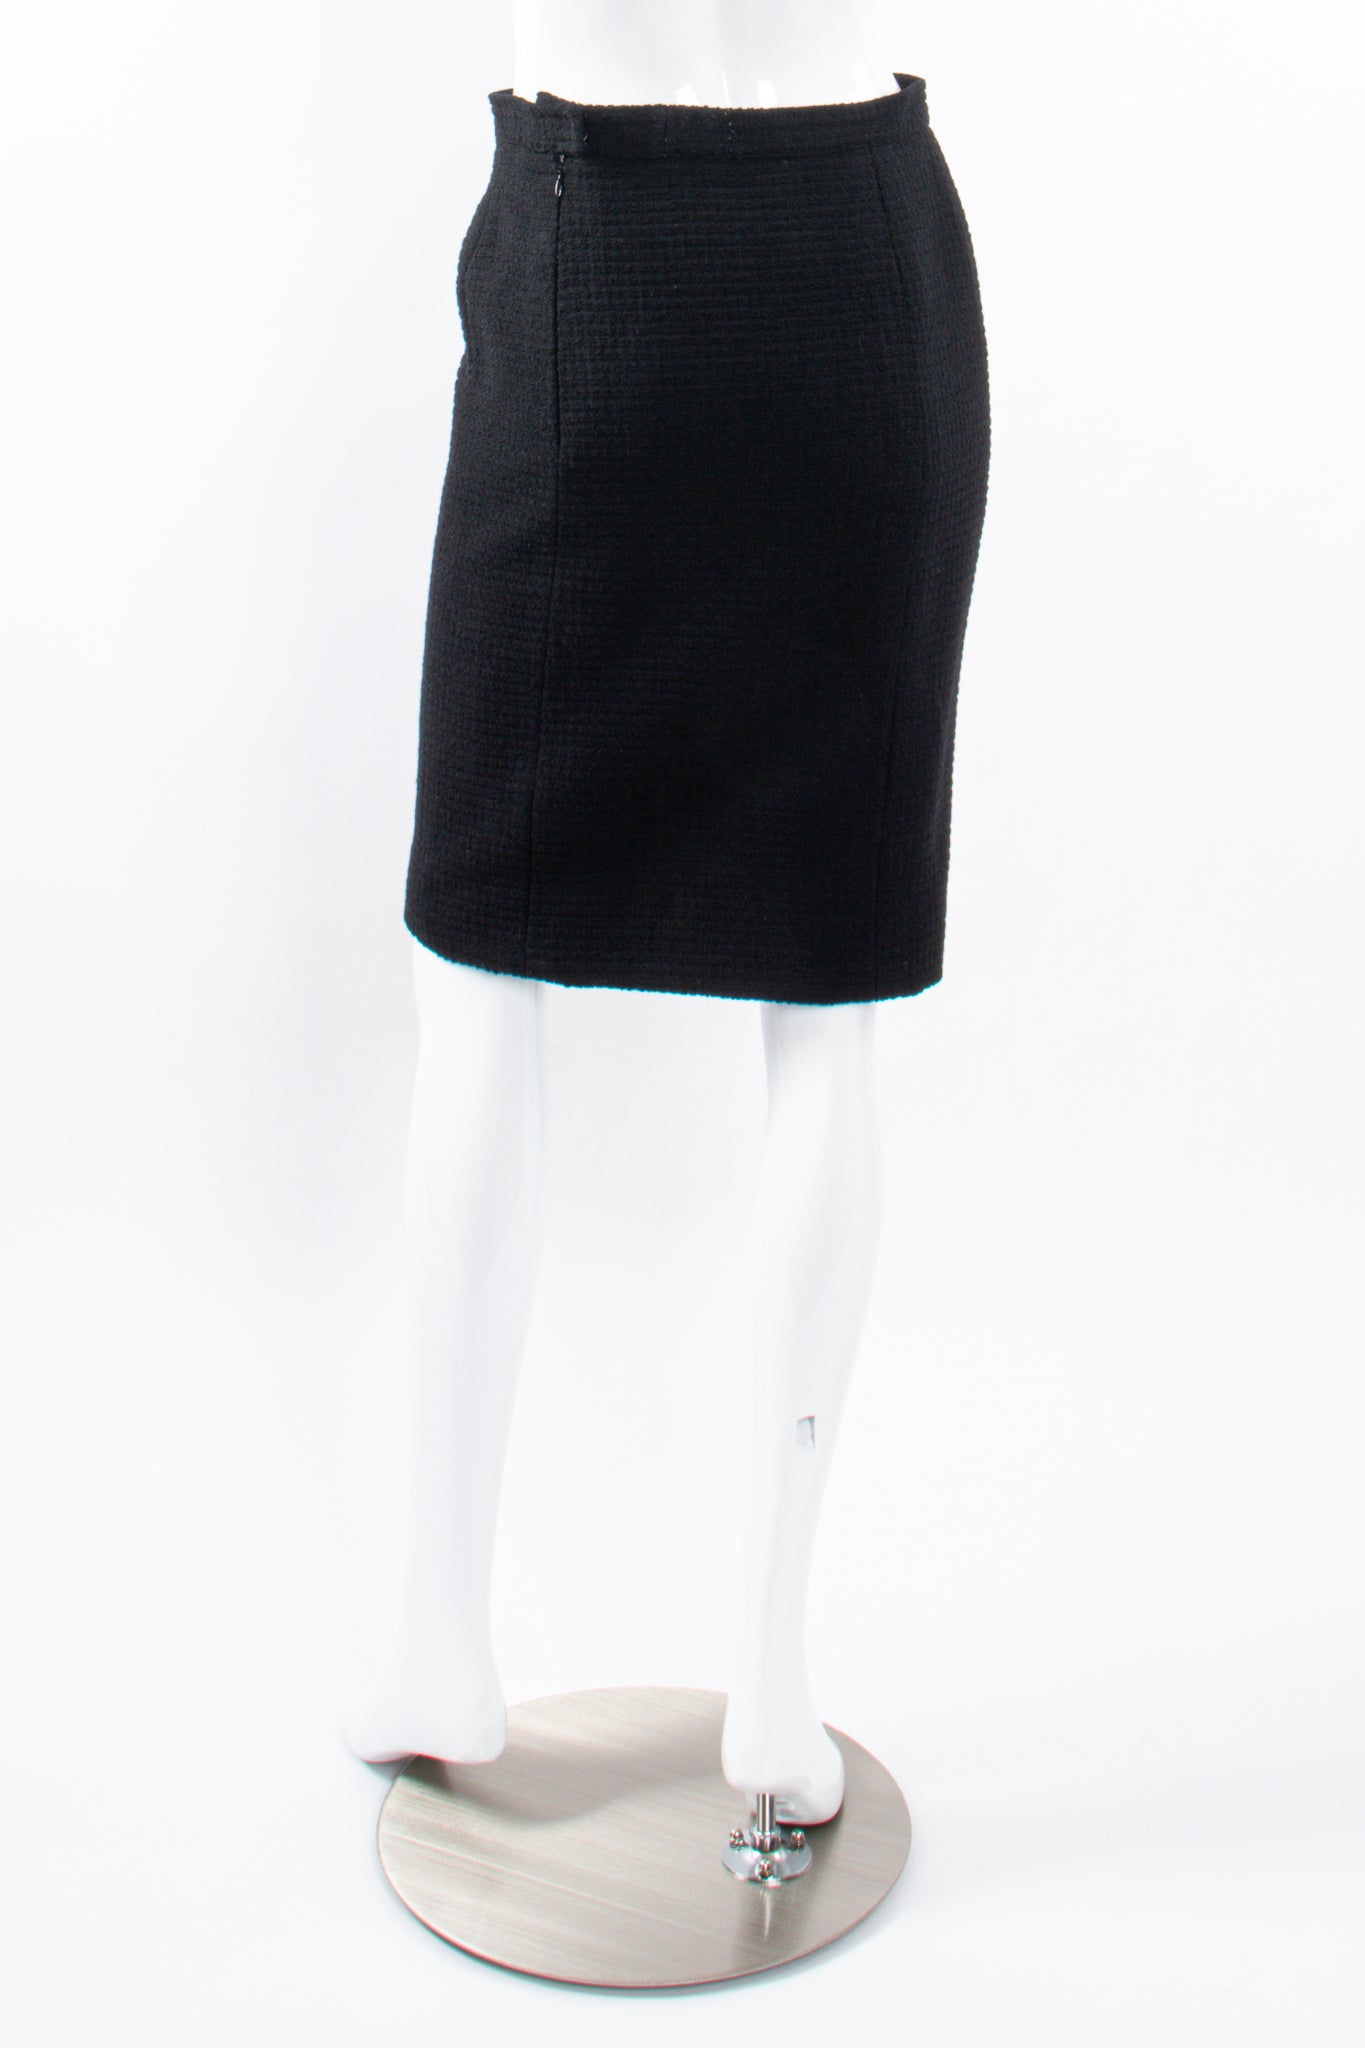 Vintage Chanel Monochrome Tweed Boxy Jacket and Skirt Set skirt back on Mannequin at Recess LA